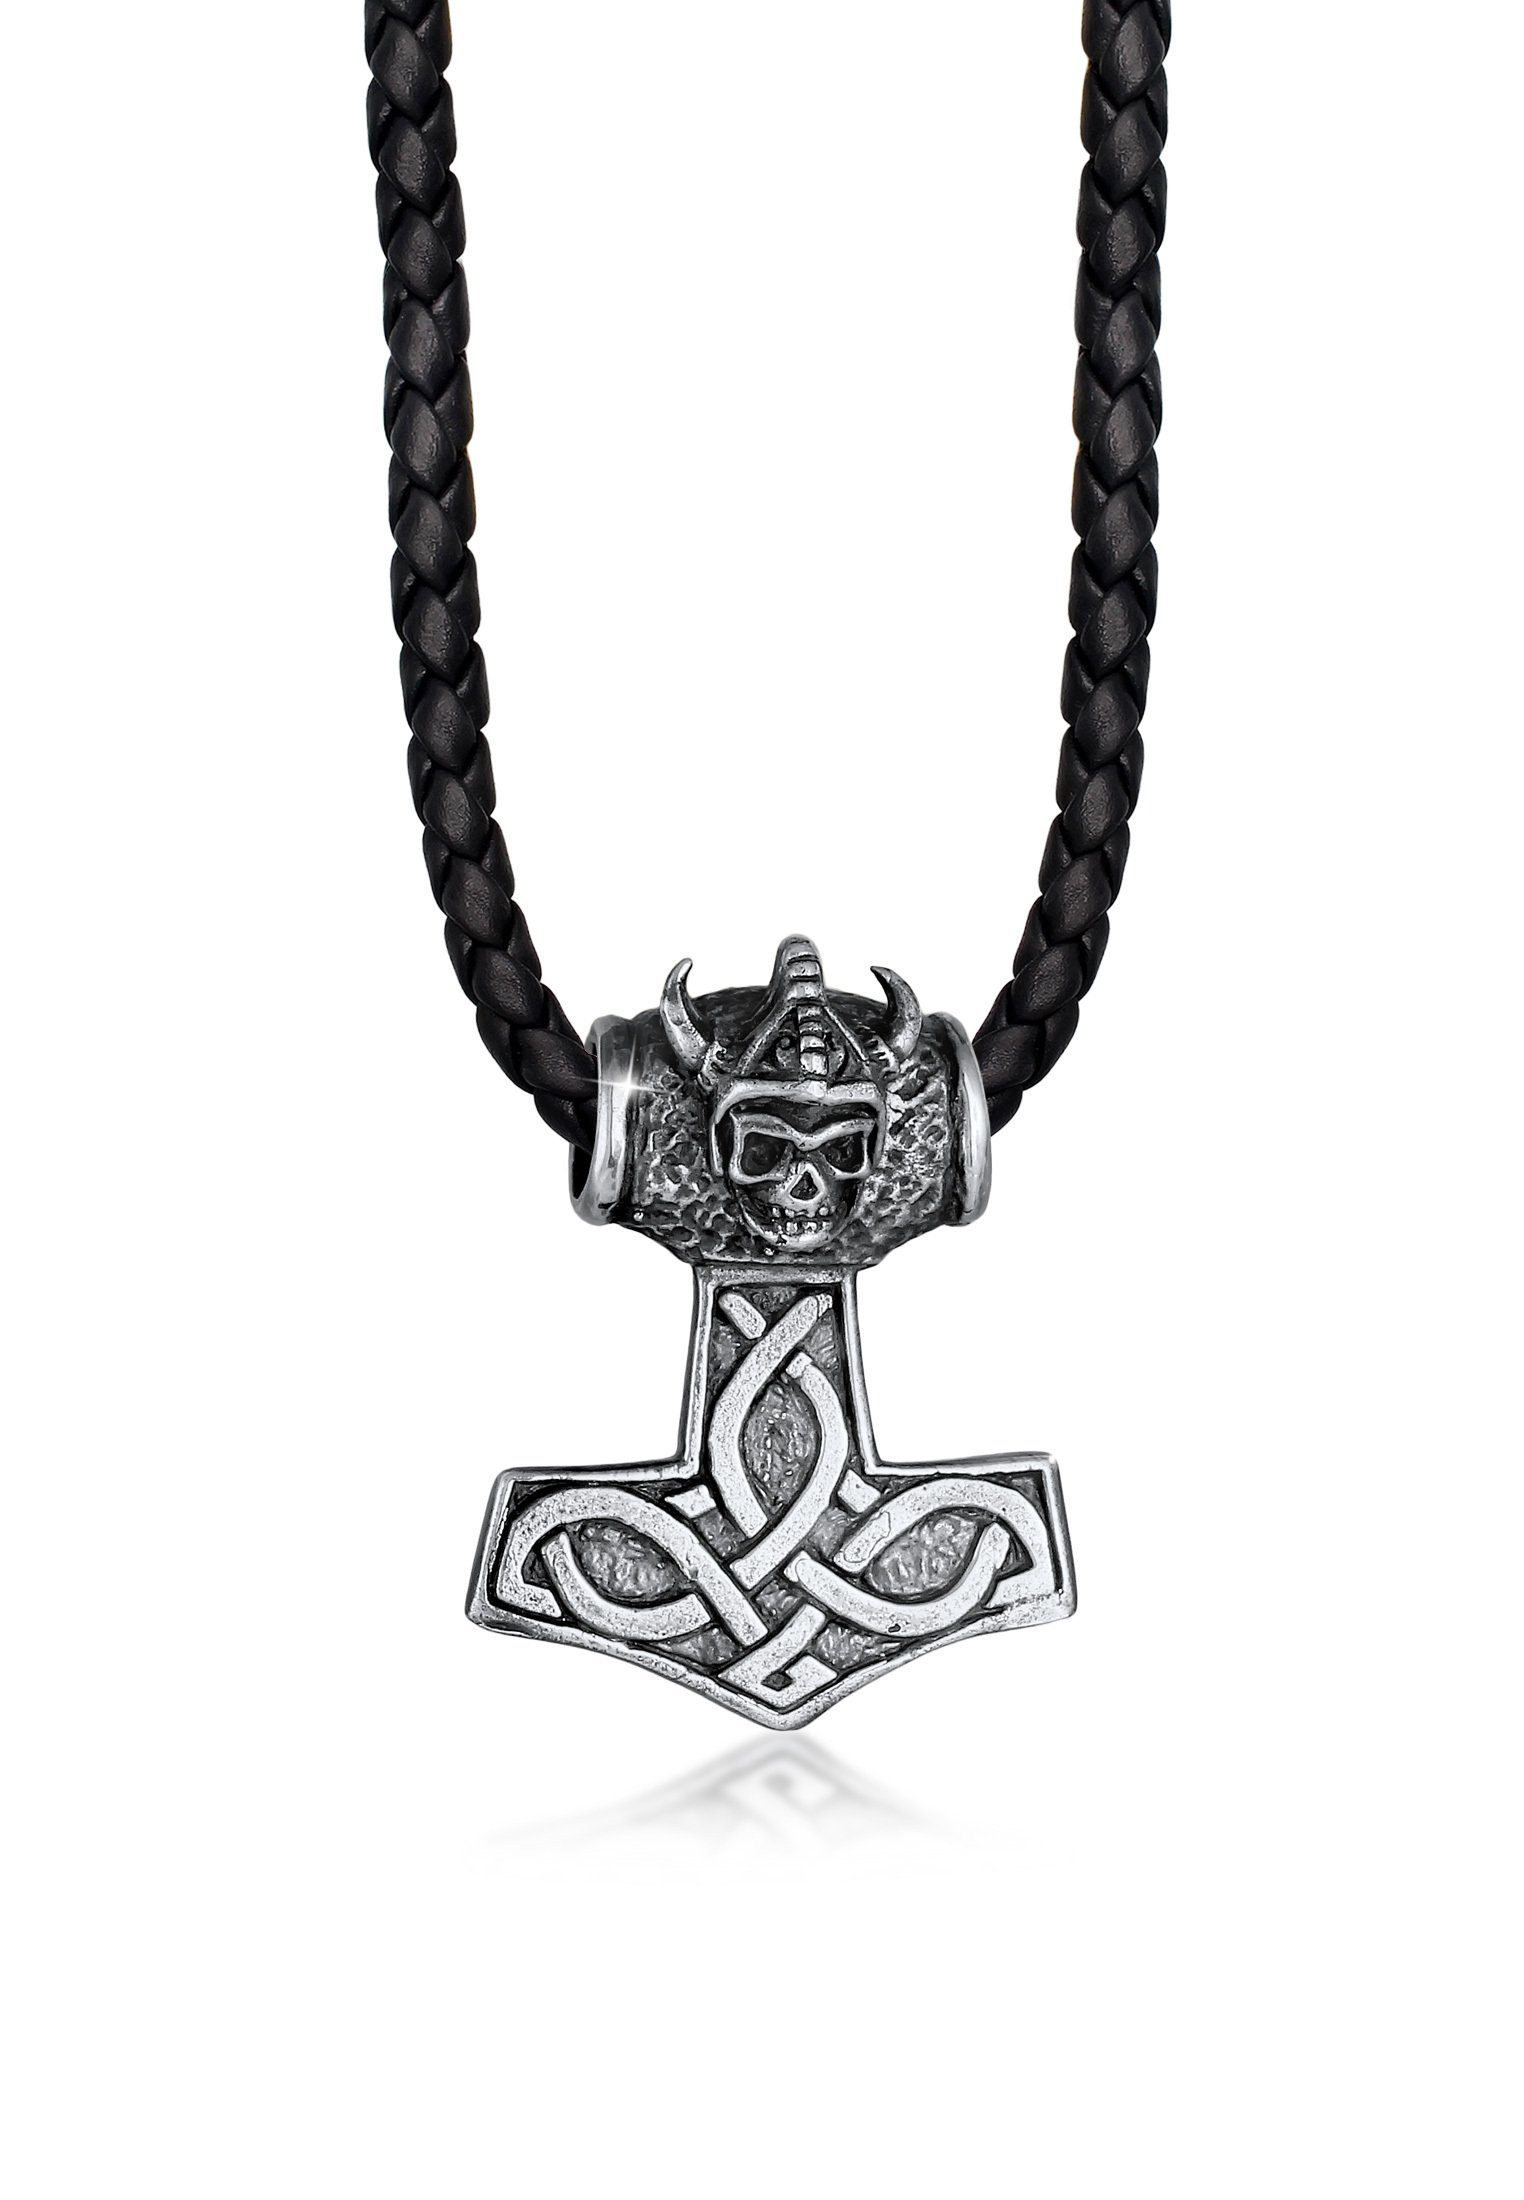 Kuzzoi Kette mit Anhänger Lederkette Hammer Keltischer Knoten 925 Silber